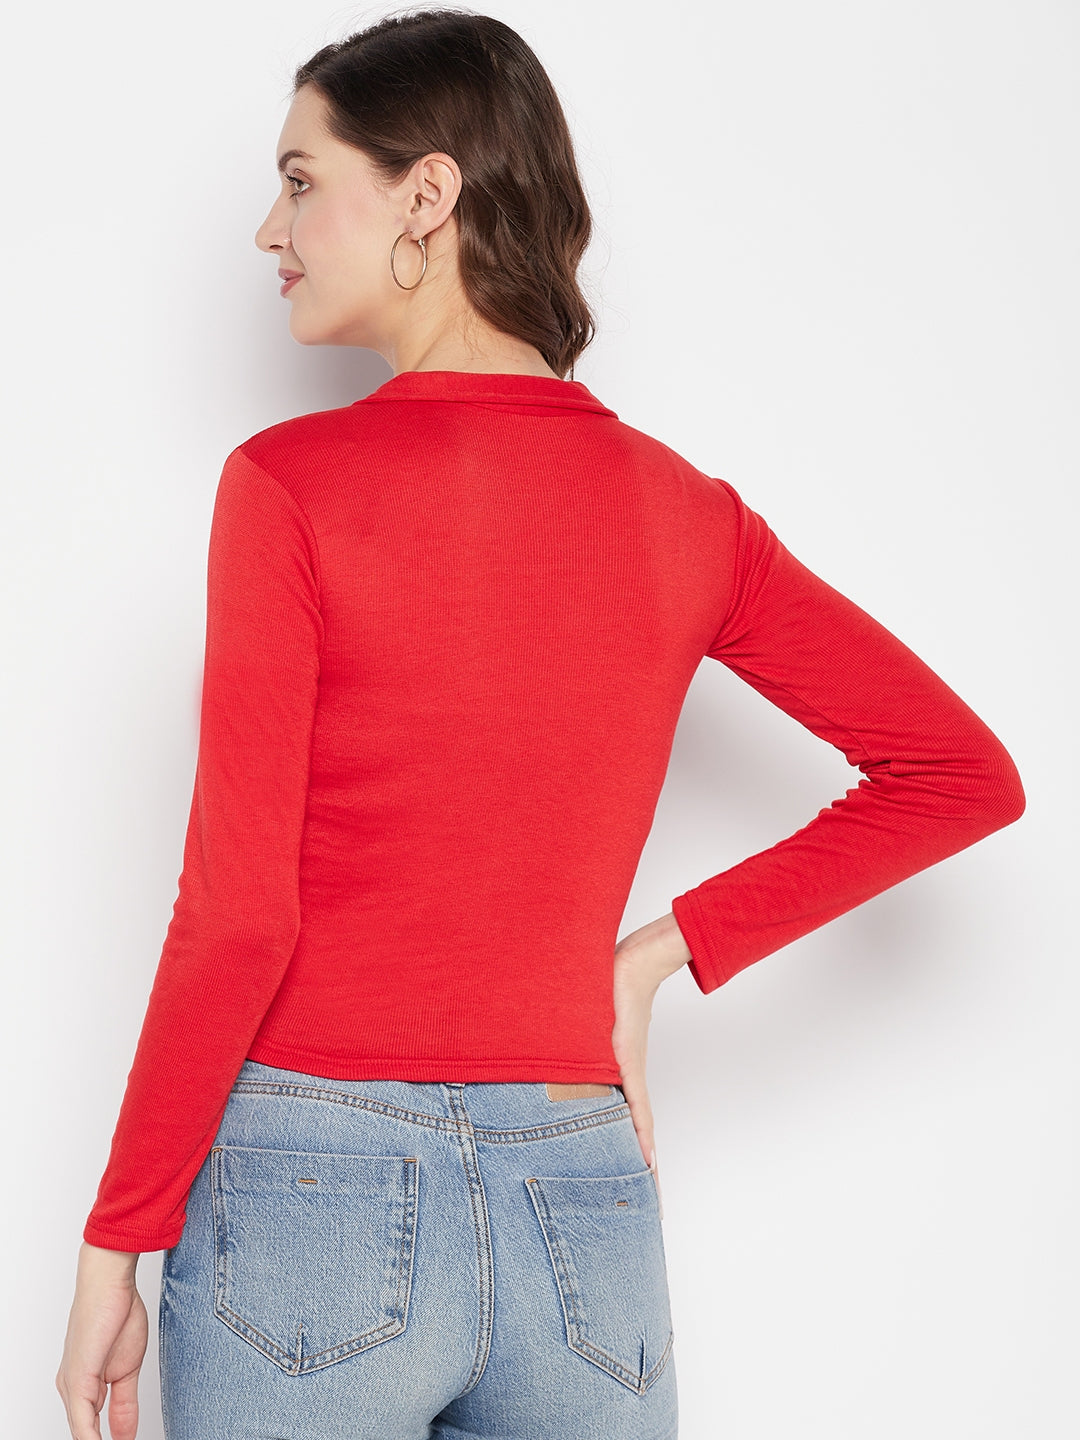 Clora Red Solid Full Sleeves Crop Top